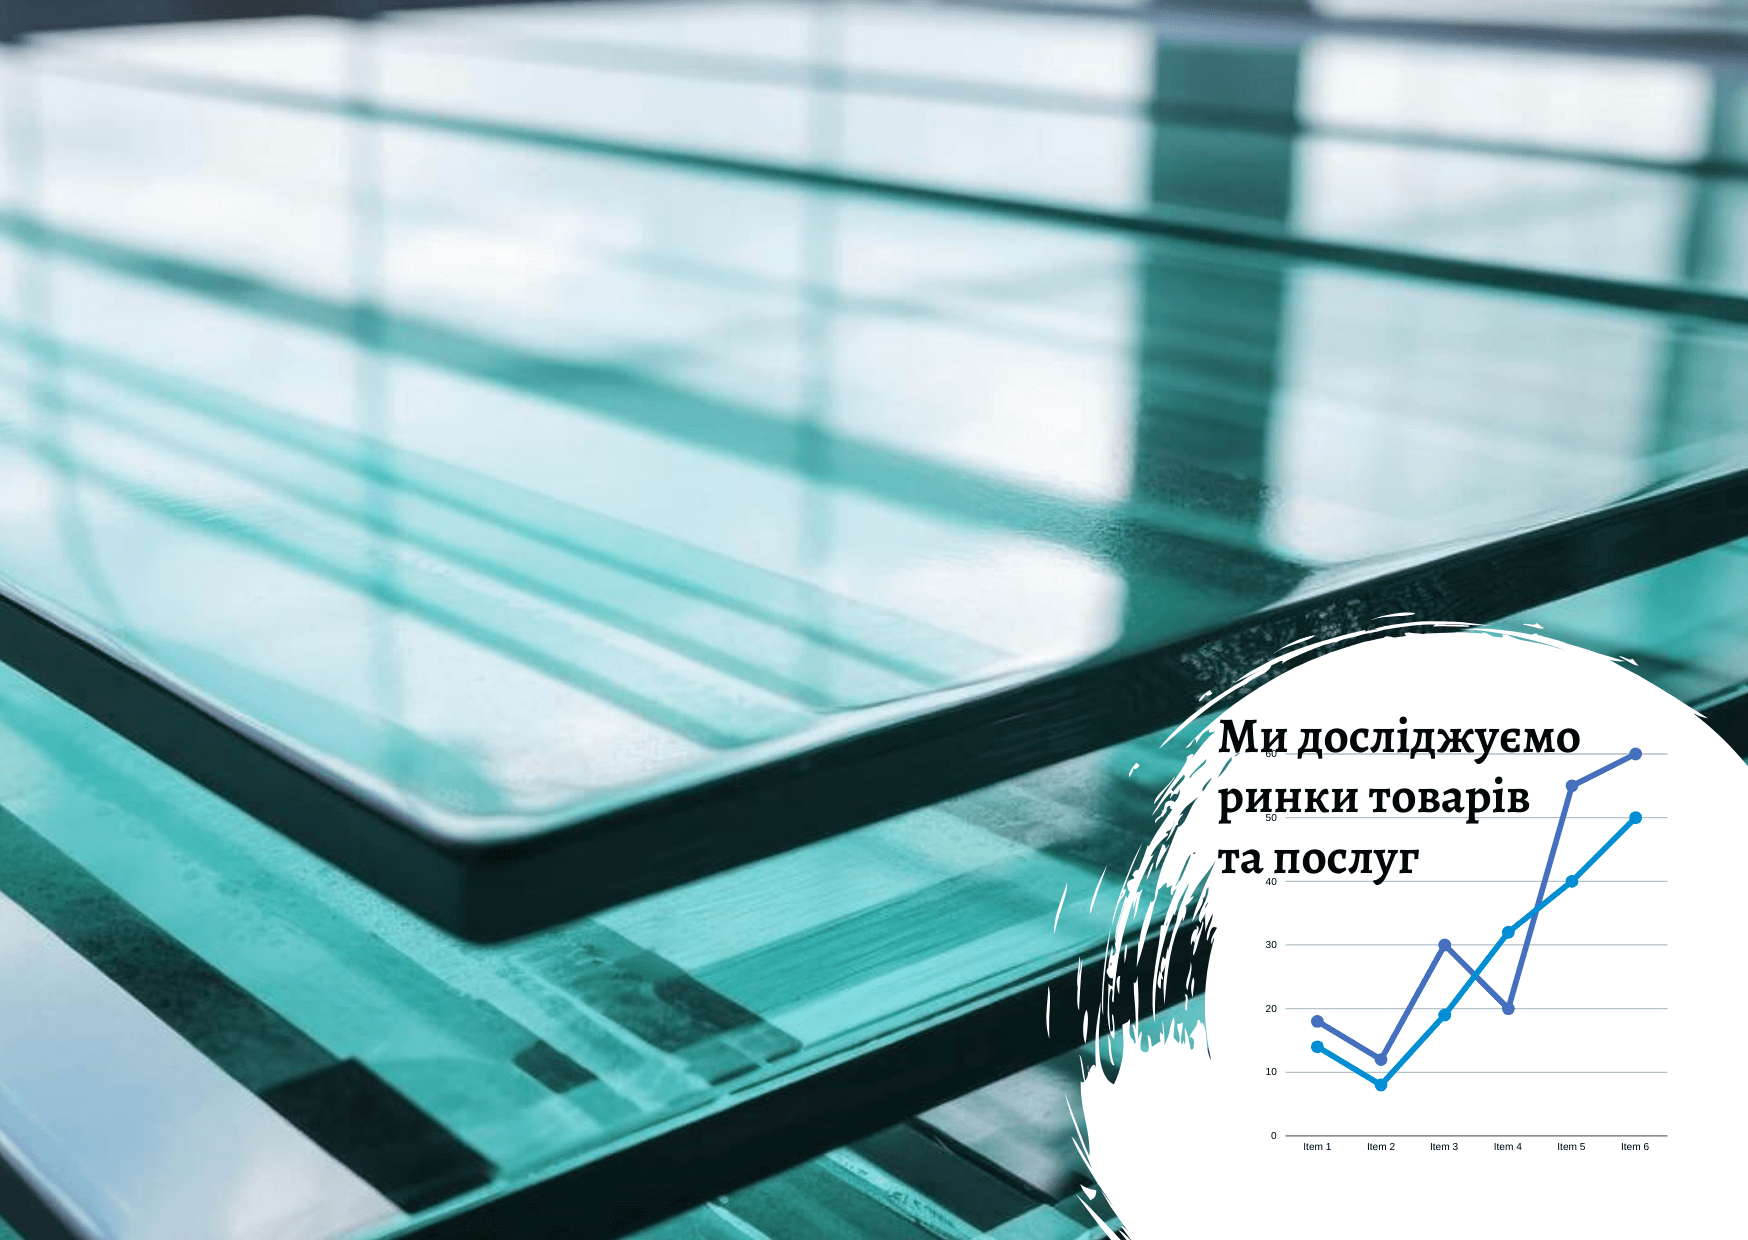 Ukrainian and EU float glass market: assessment of investment attractiveness 